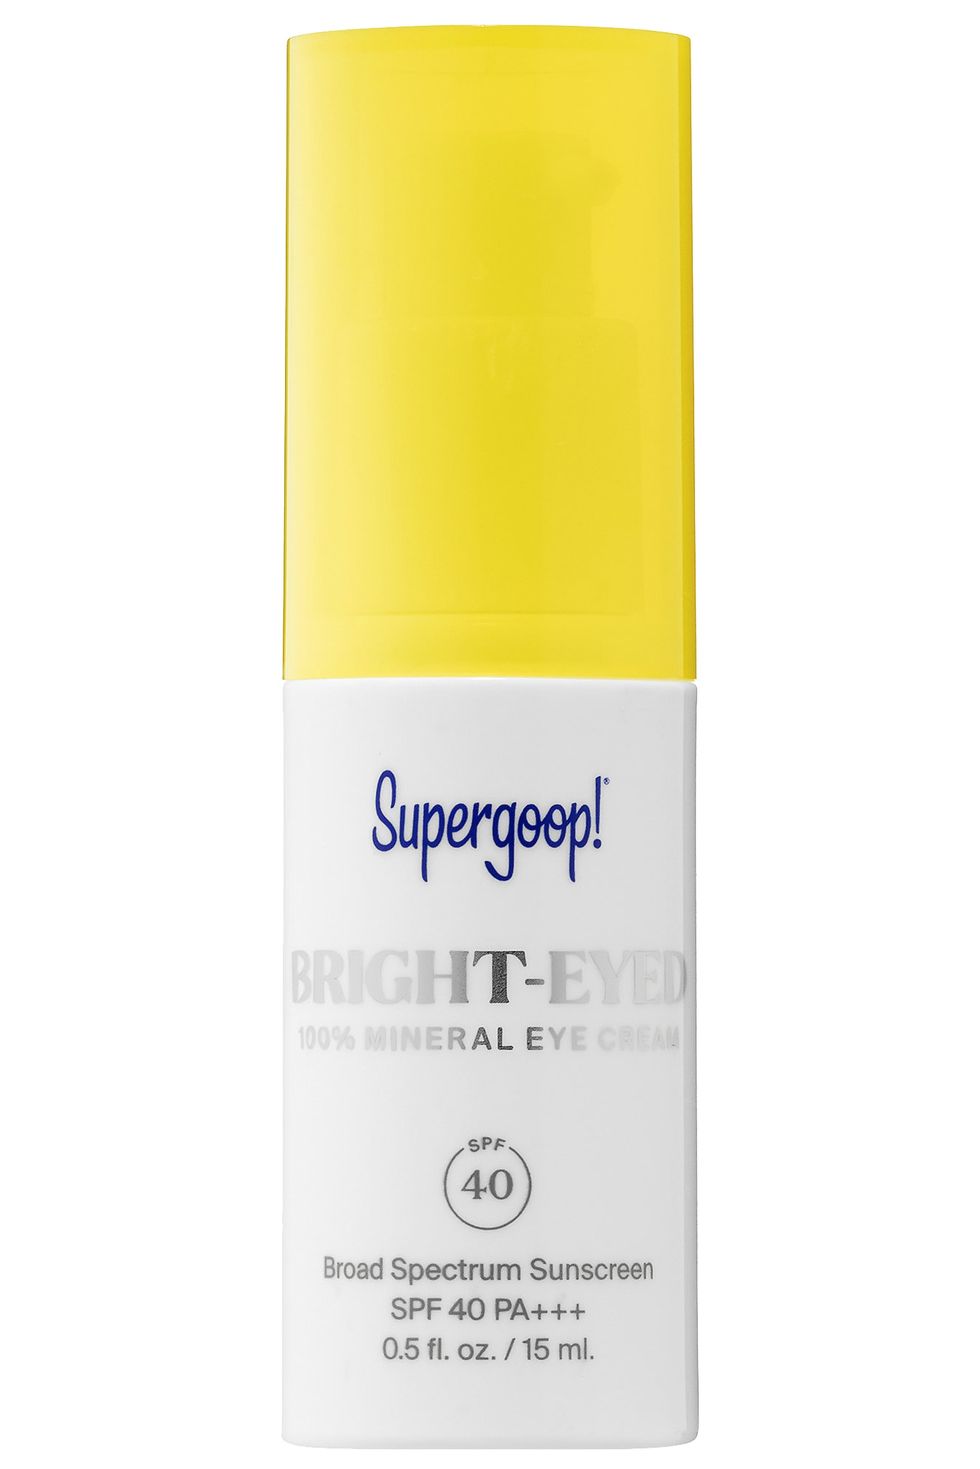 Supergoop Bright-Eyed 100% Mineral Eye Cream SPF 40 